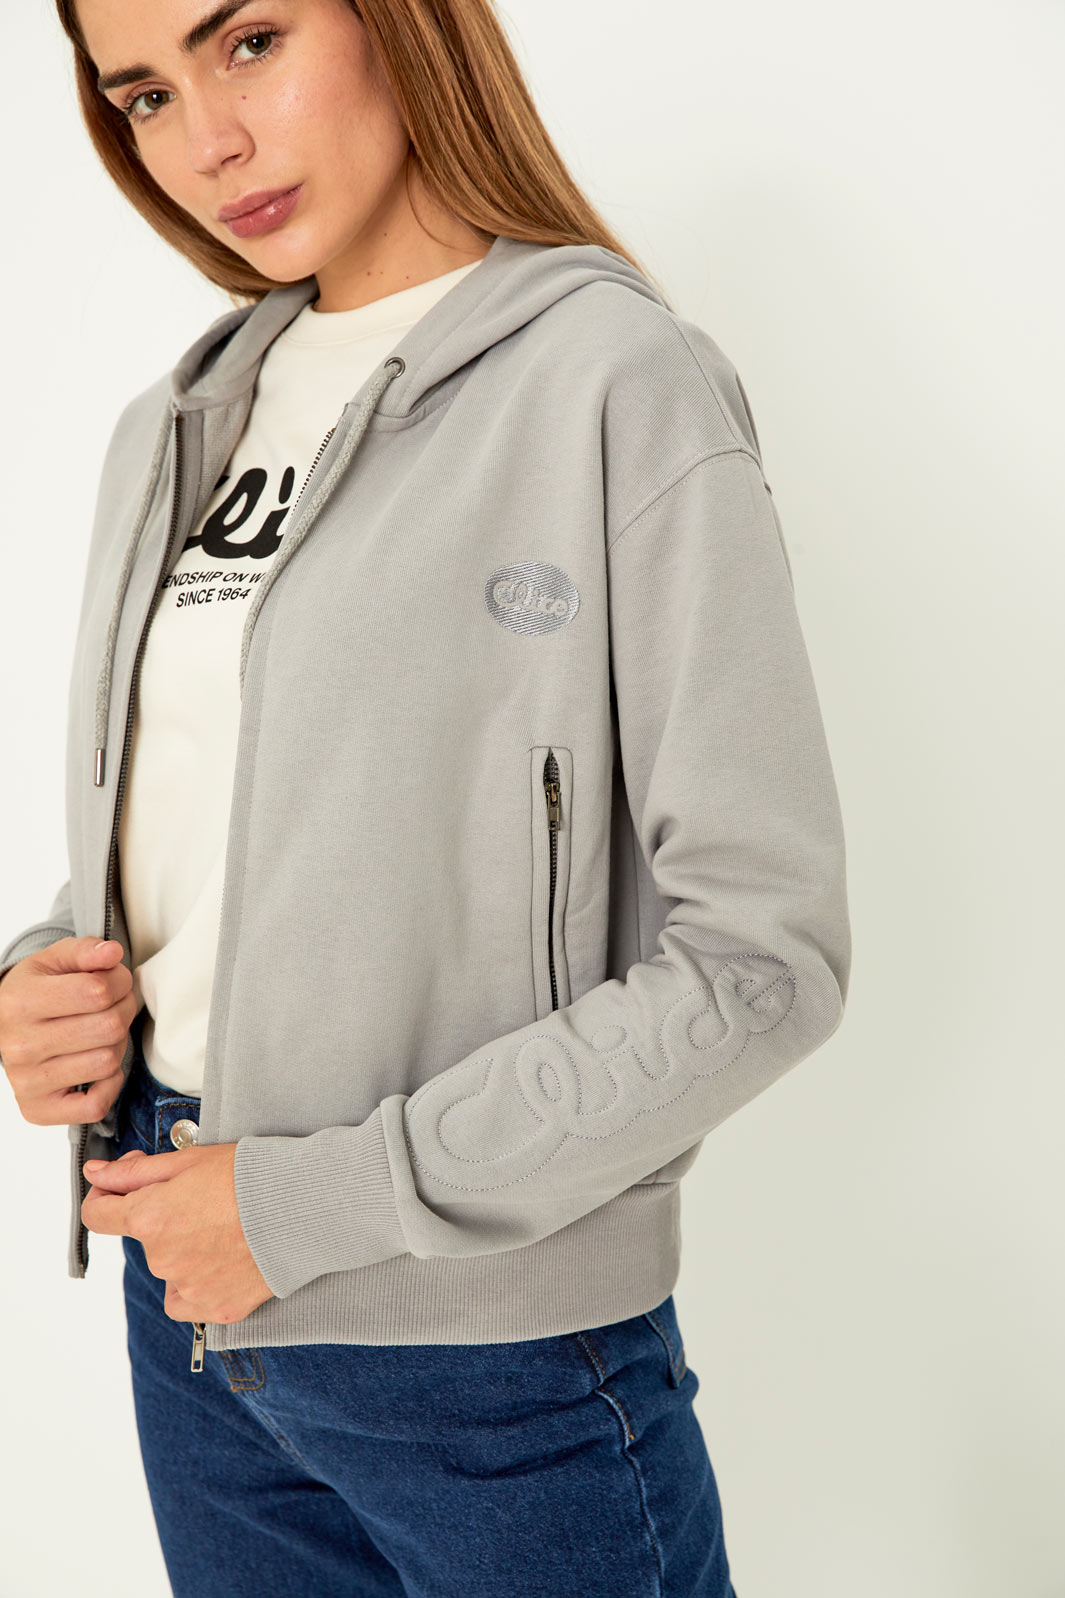 Women's hooded sweatshirt (Grey)